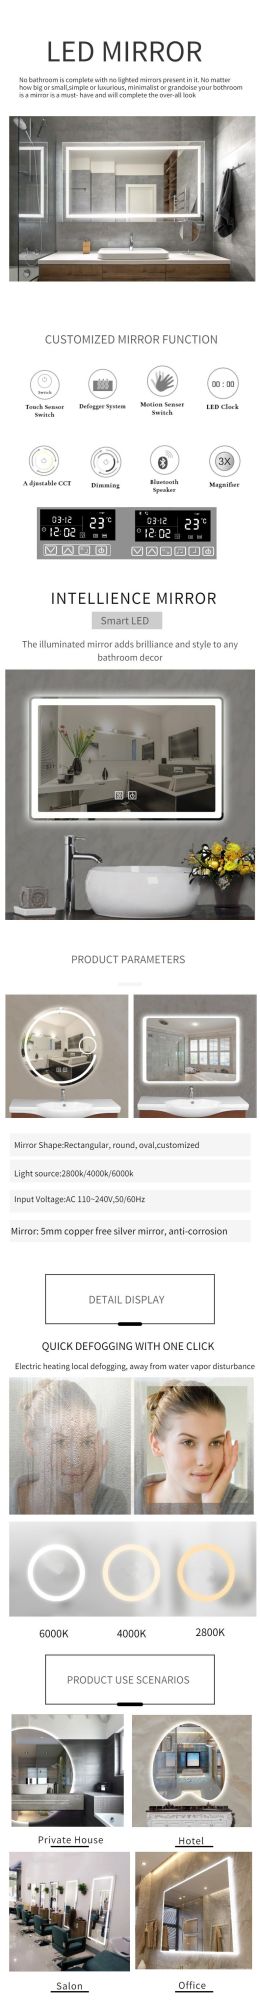 Hotel Furniture Bathroom Makeup LED Mirror with Bluetooth Speaker